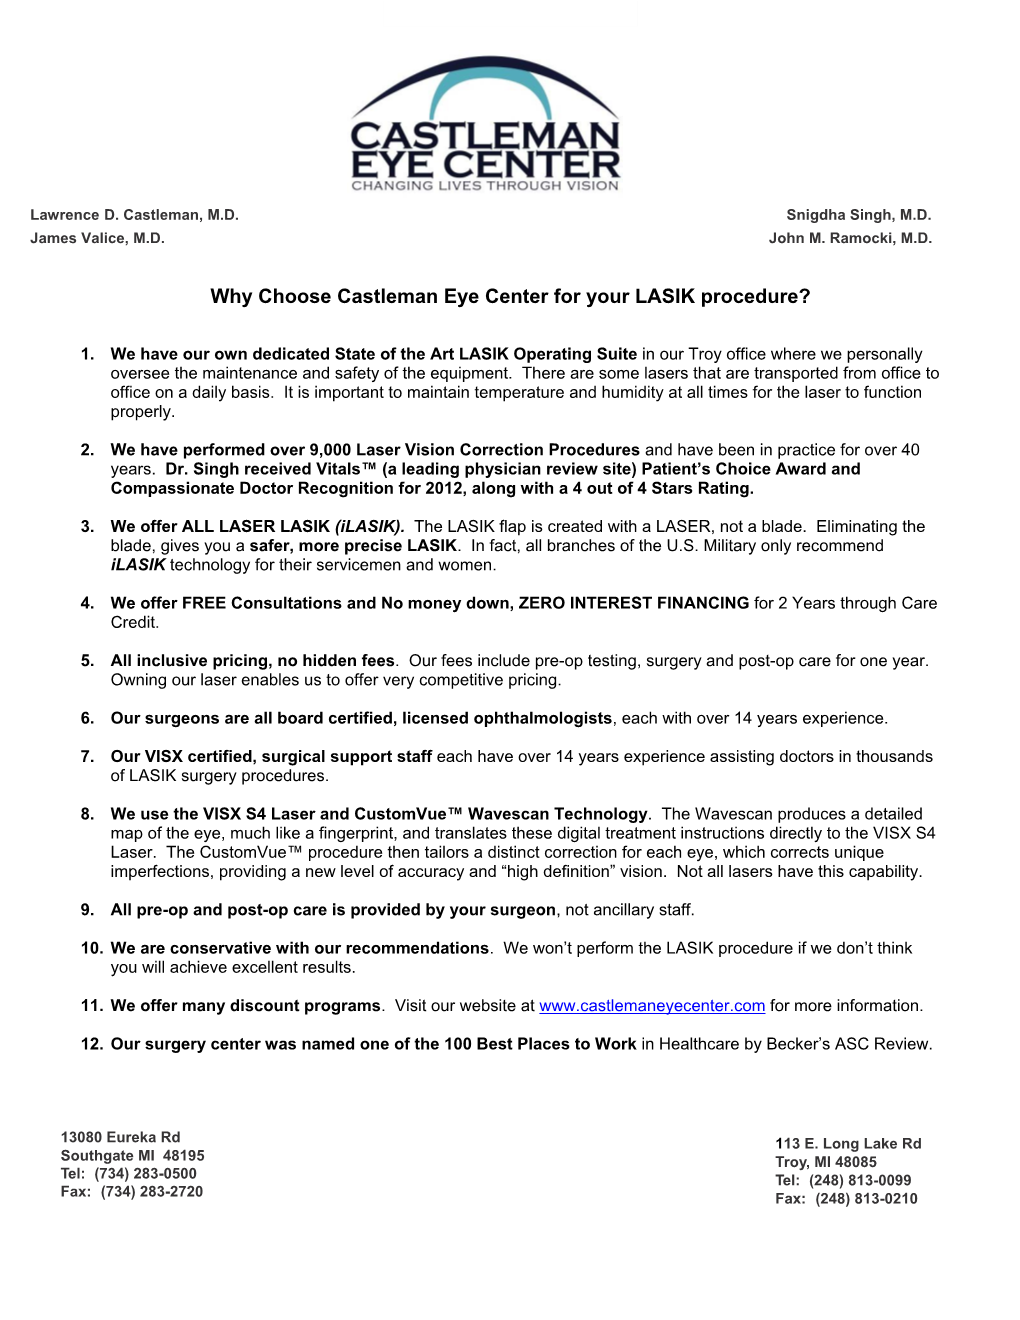 Why Choose Castleman Eye Center for Your LASIK Procedure?